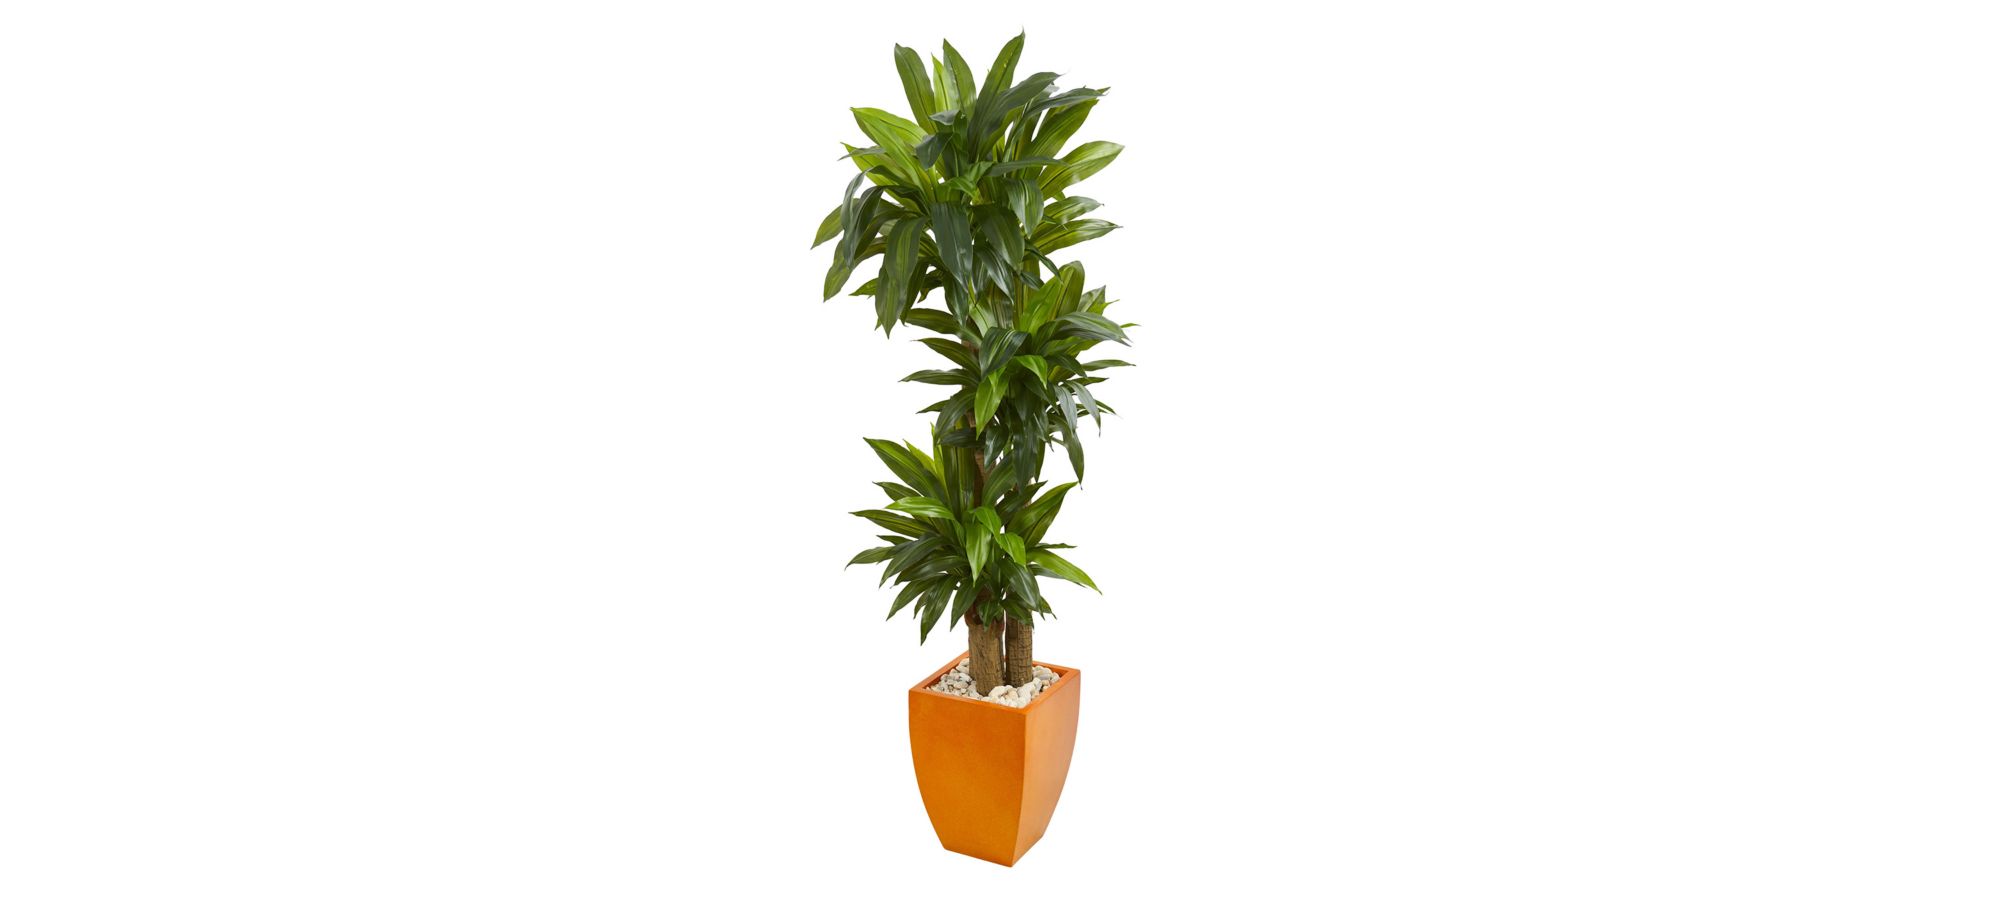 5.5ft. Dracaena Plant in Orange Planter in Green by Bellanest